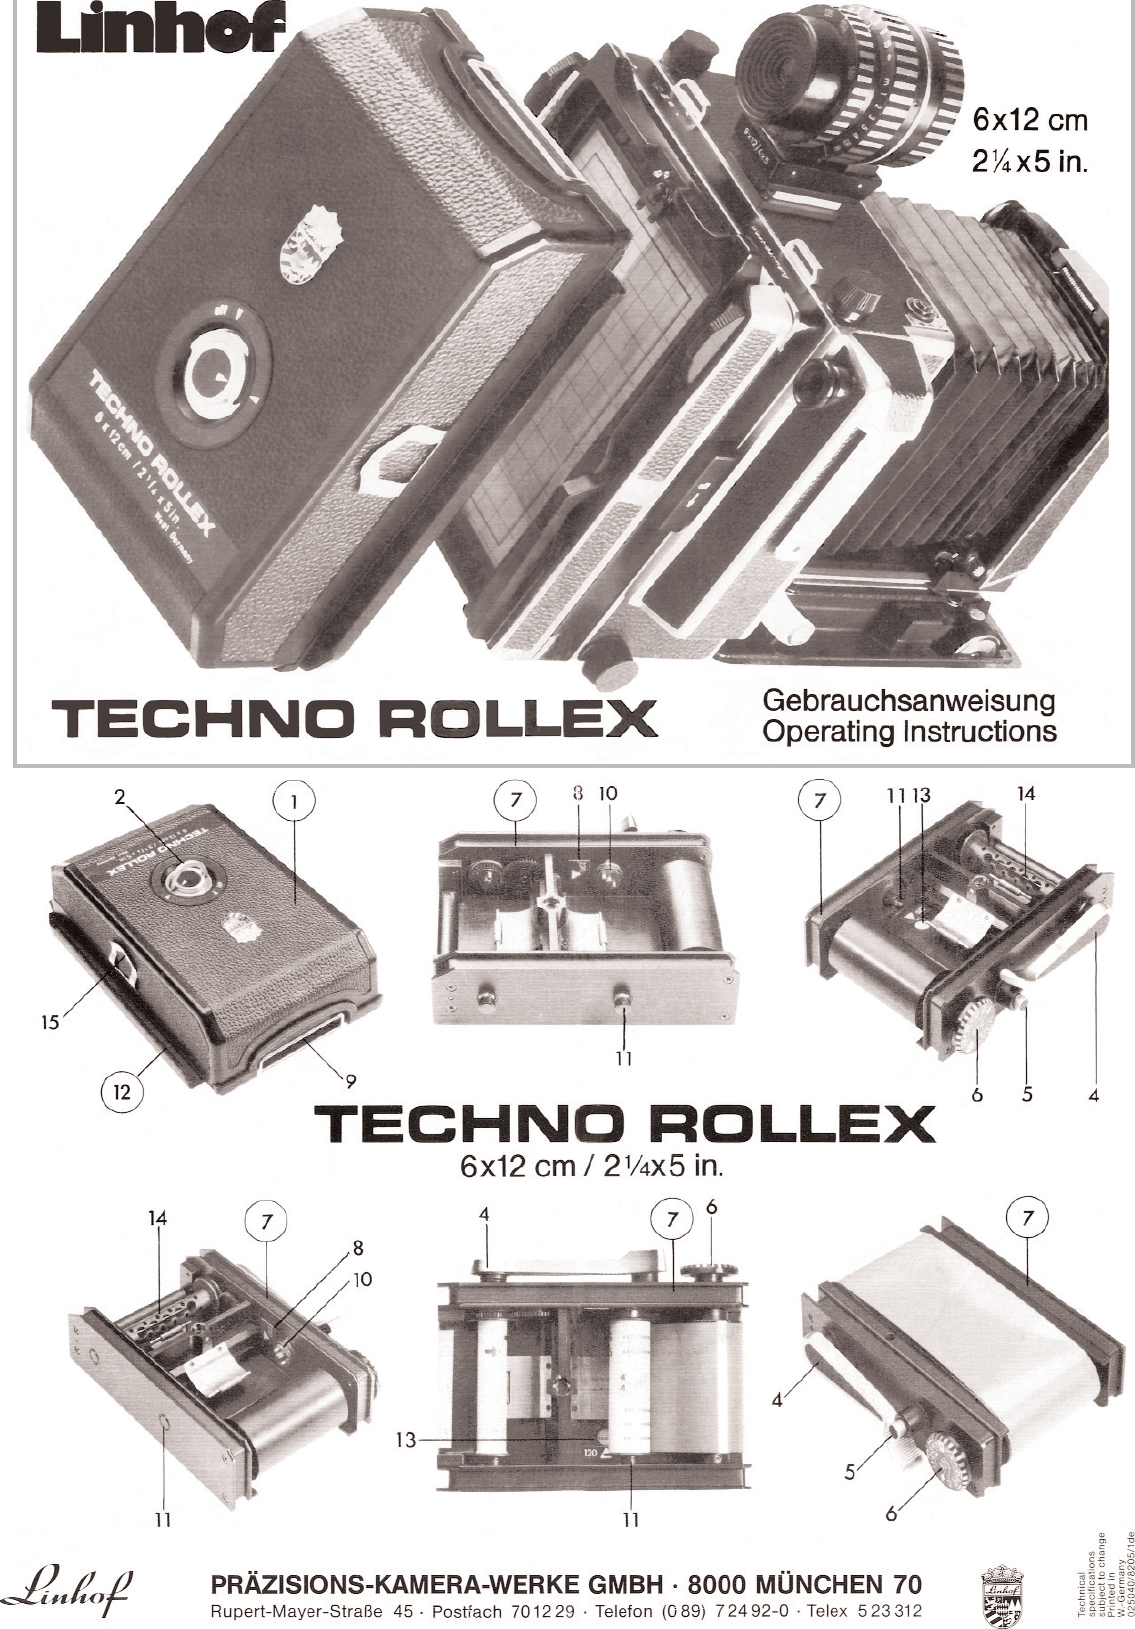 Page 1 of 3 - Linhof Linhof-Techno-Rollex-6X12-Instruction-Manual- Linhof_Techno_Rollex_6x12.qxp  Linhof-techno-rollex-6x12-instruction-manual